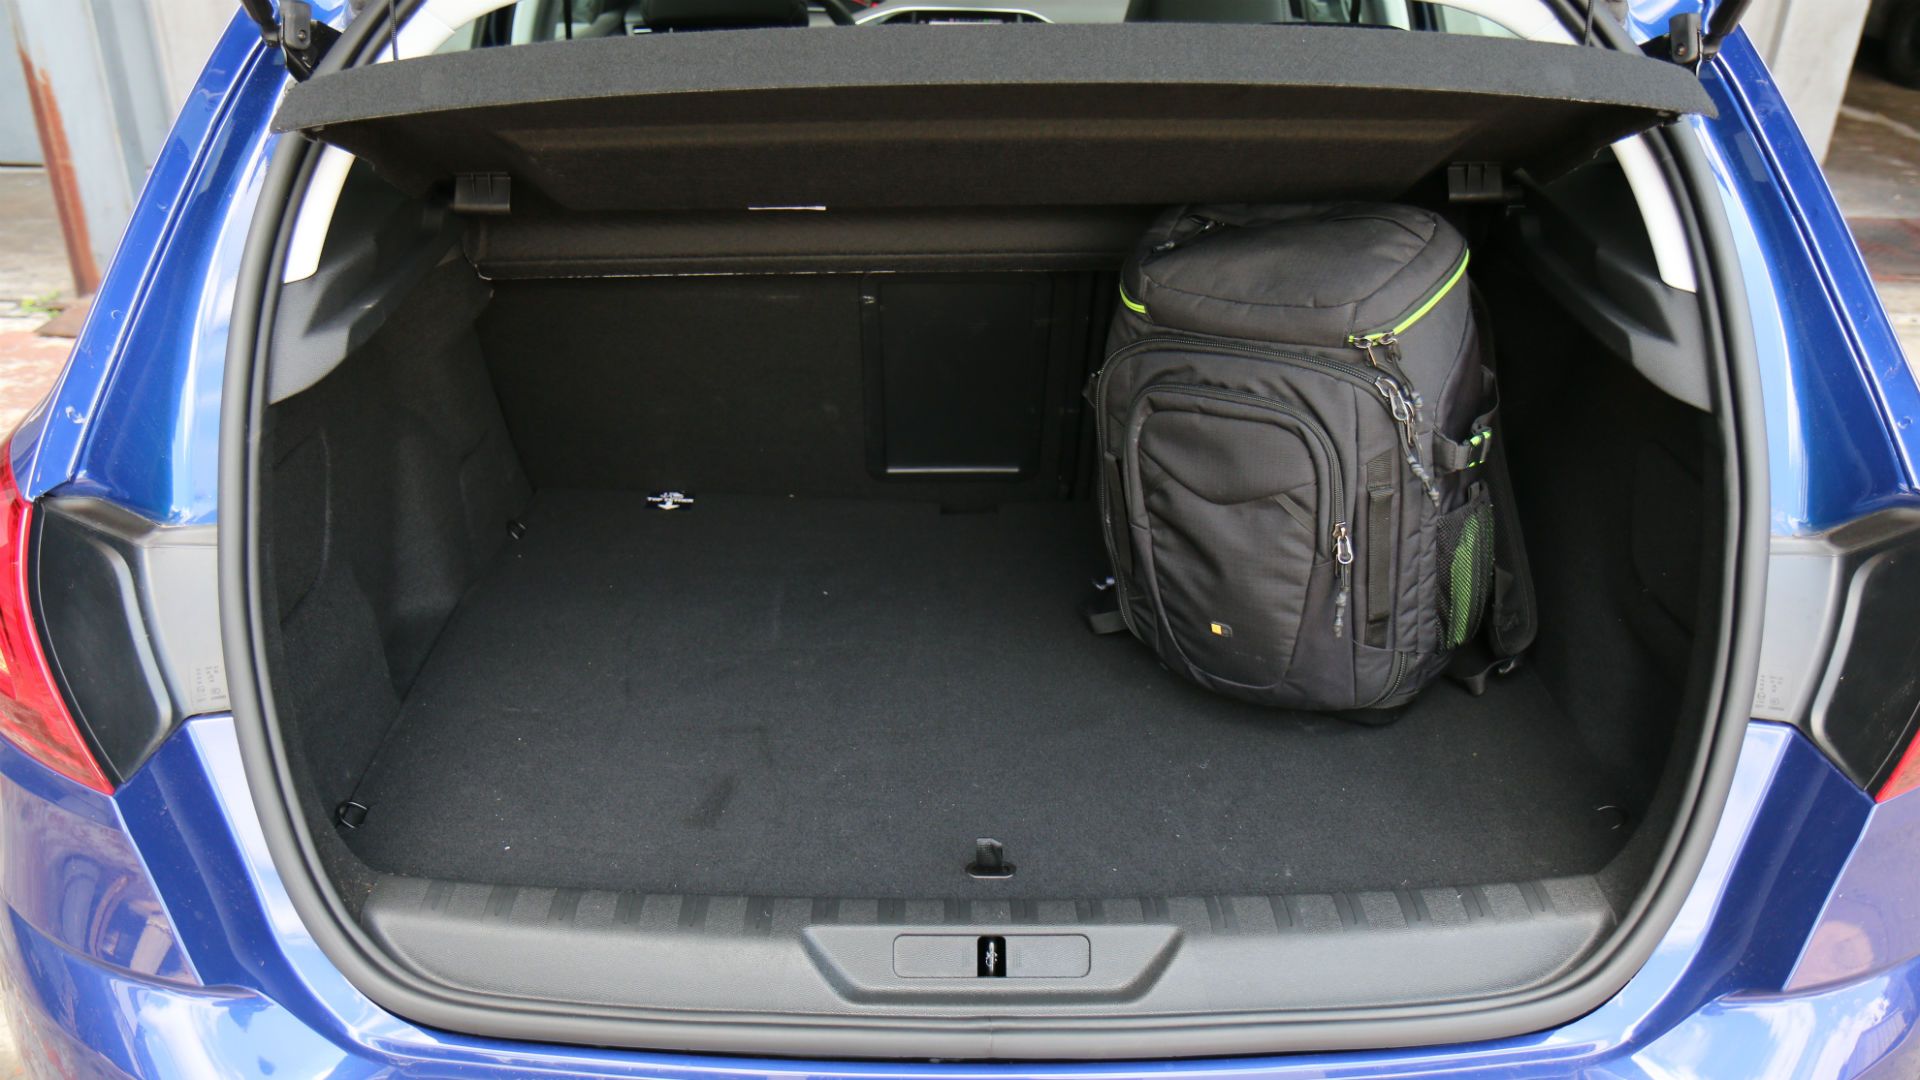 Peugeot 308, Interior y maletero